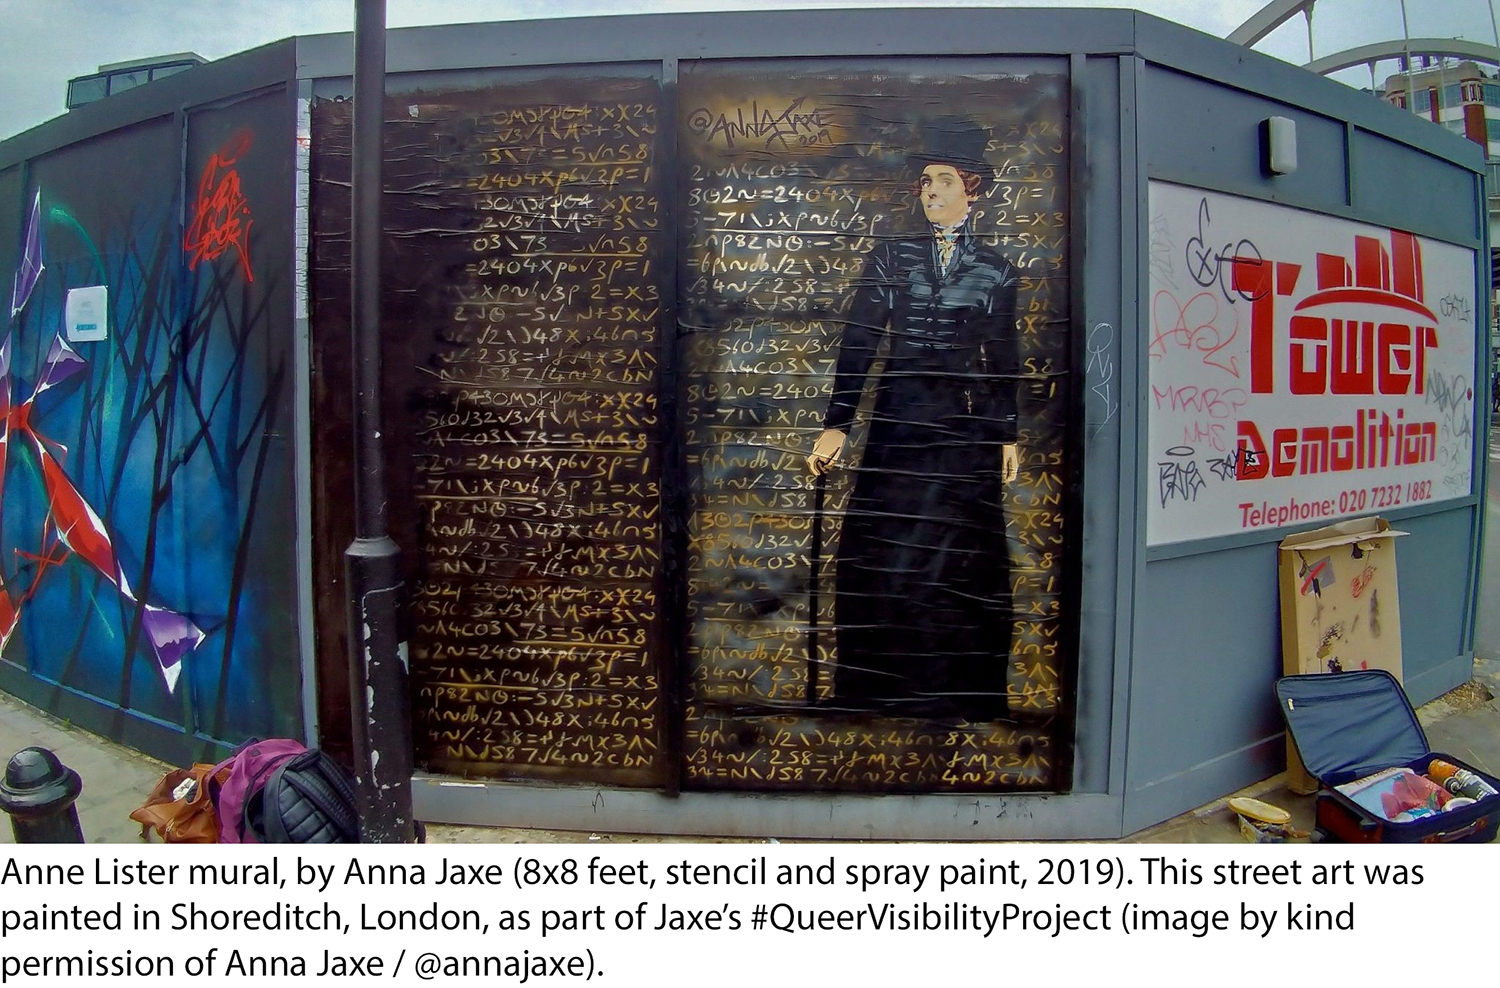 Anne Lister Anna Jaxe Shoreditch London #queervisibilityproject @annajaxe